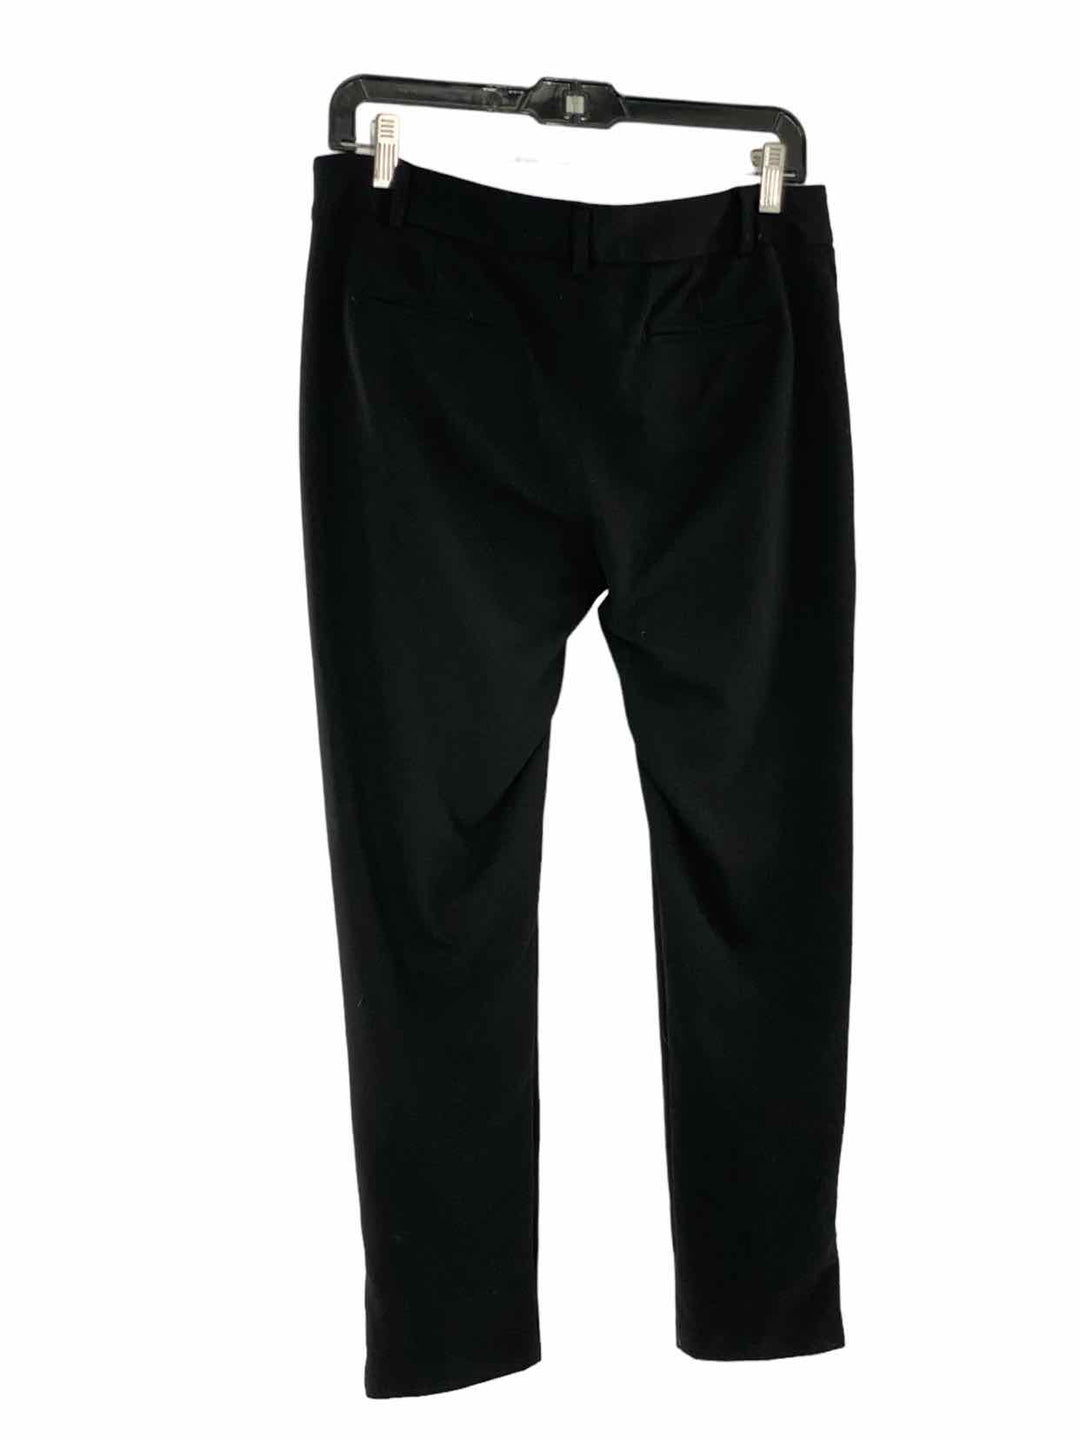 Michael Kors Size 10 Black Pants